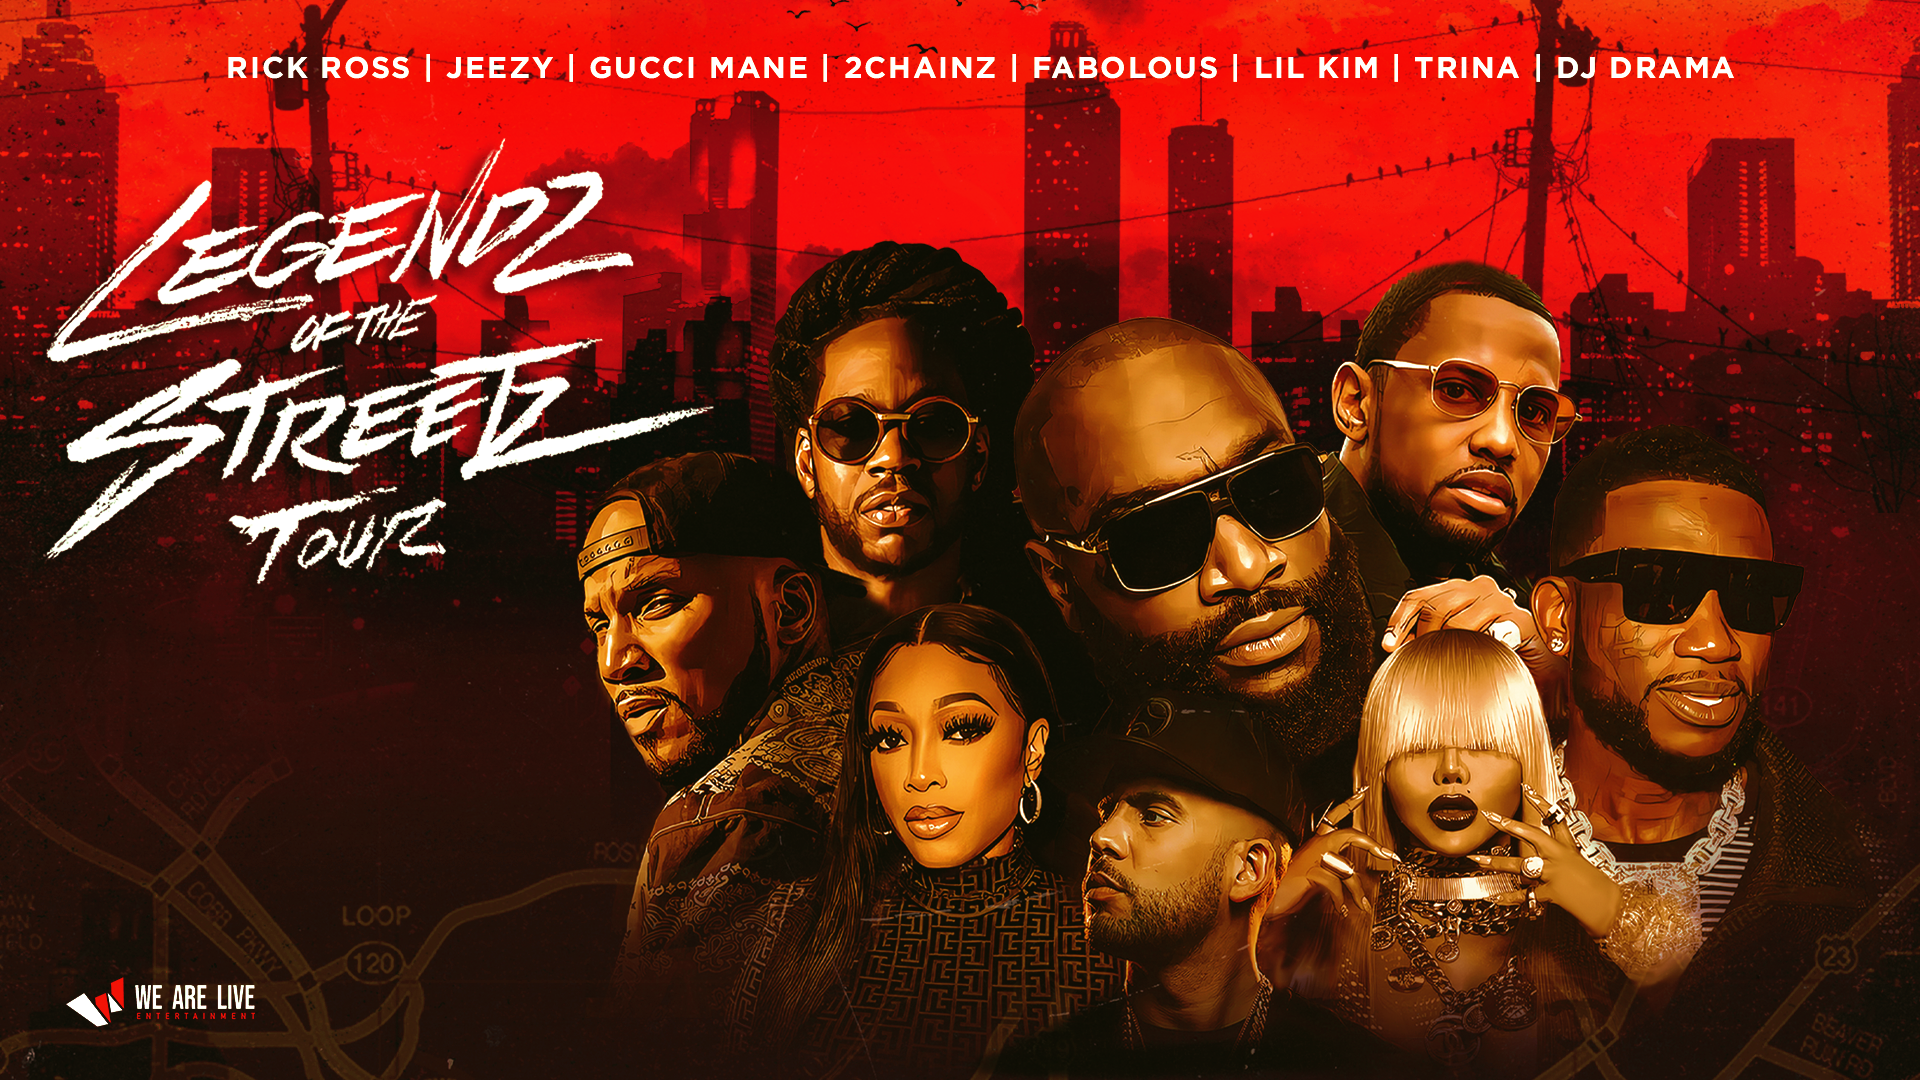 Legendz of the Streetz Tour: Rick Ross, Jeezy, Gucci Mane, T.I., Jadakiss & Cam'ron